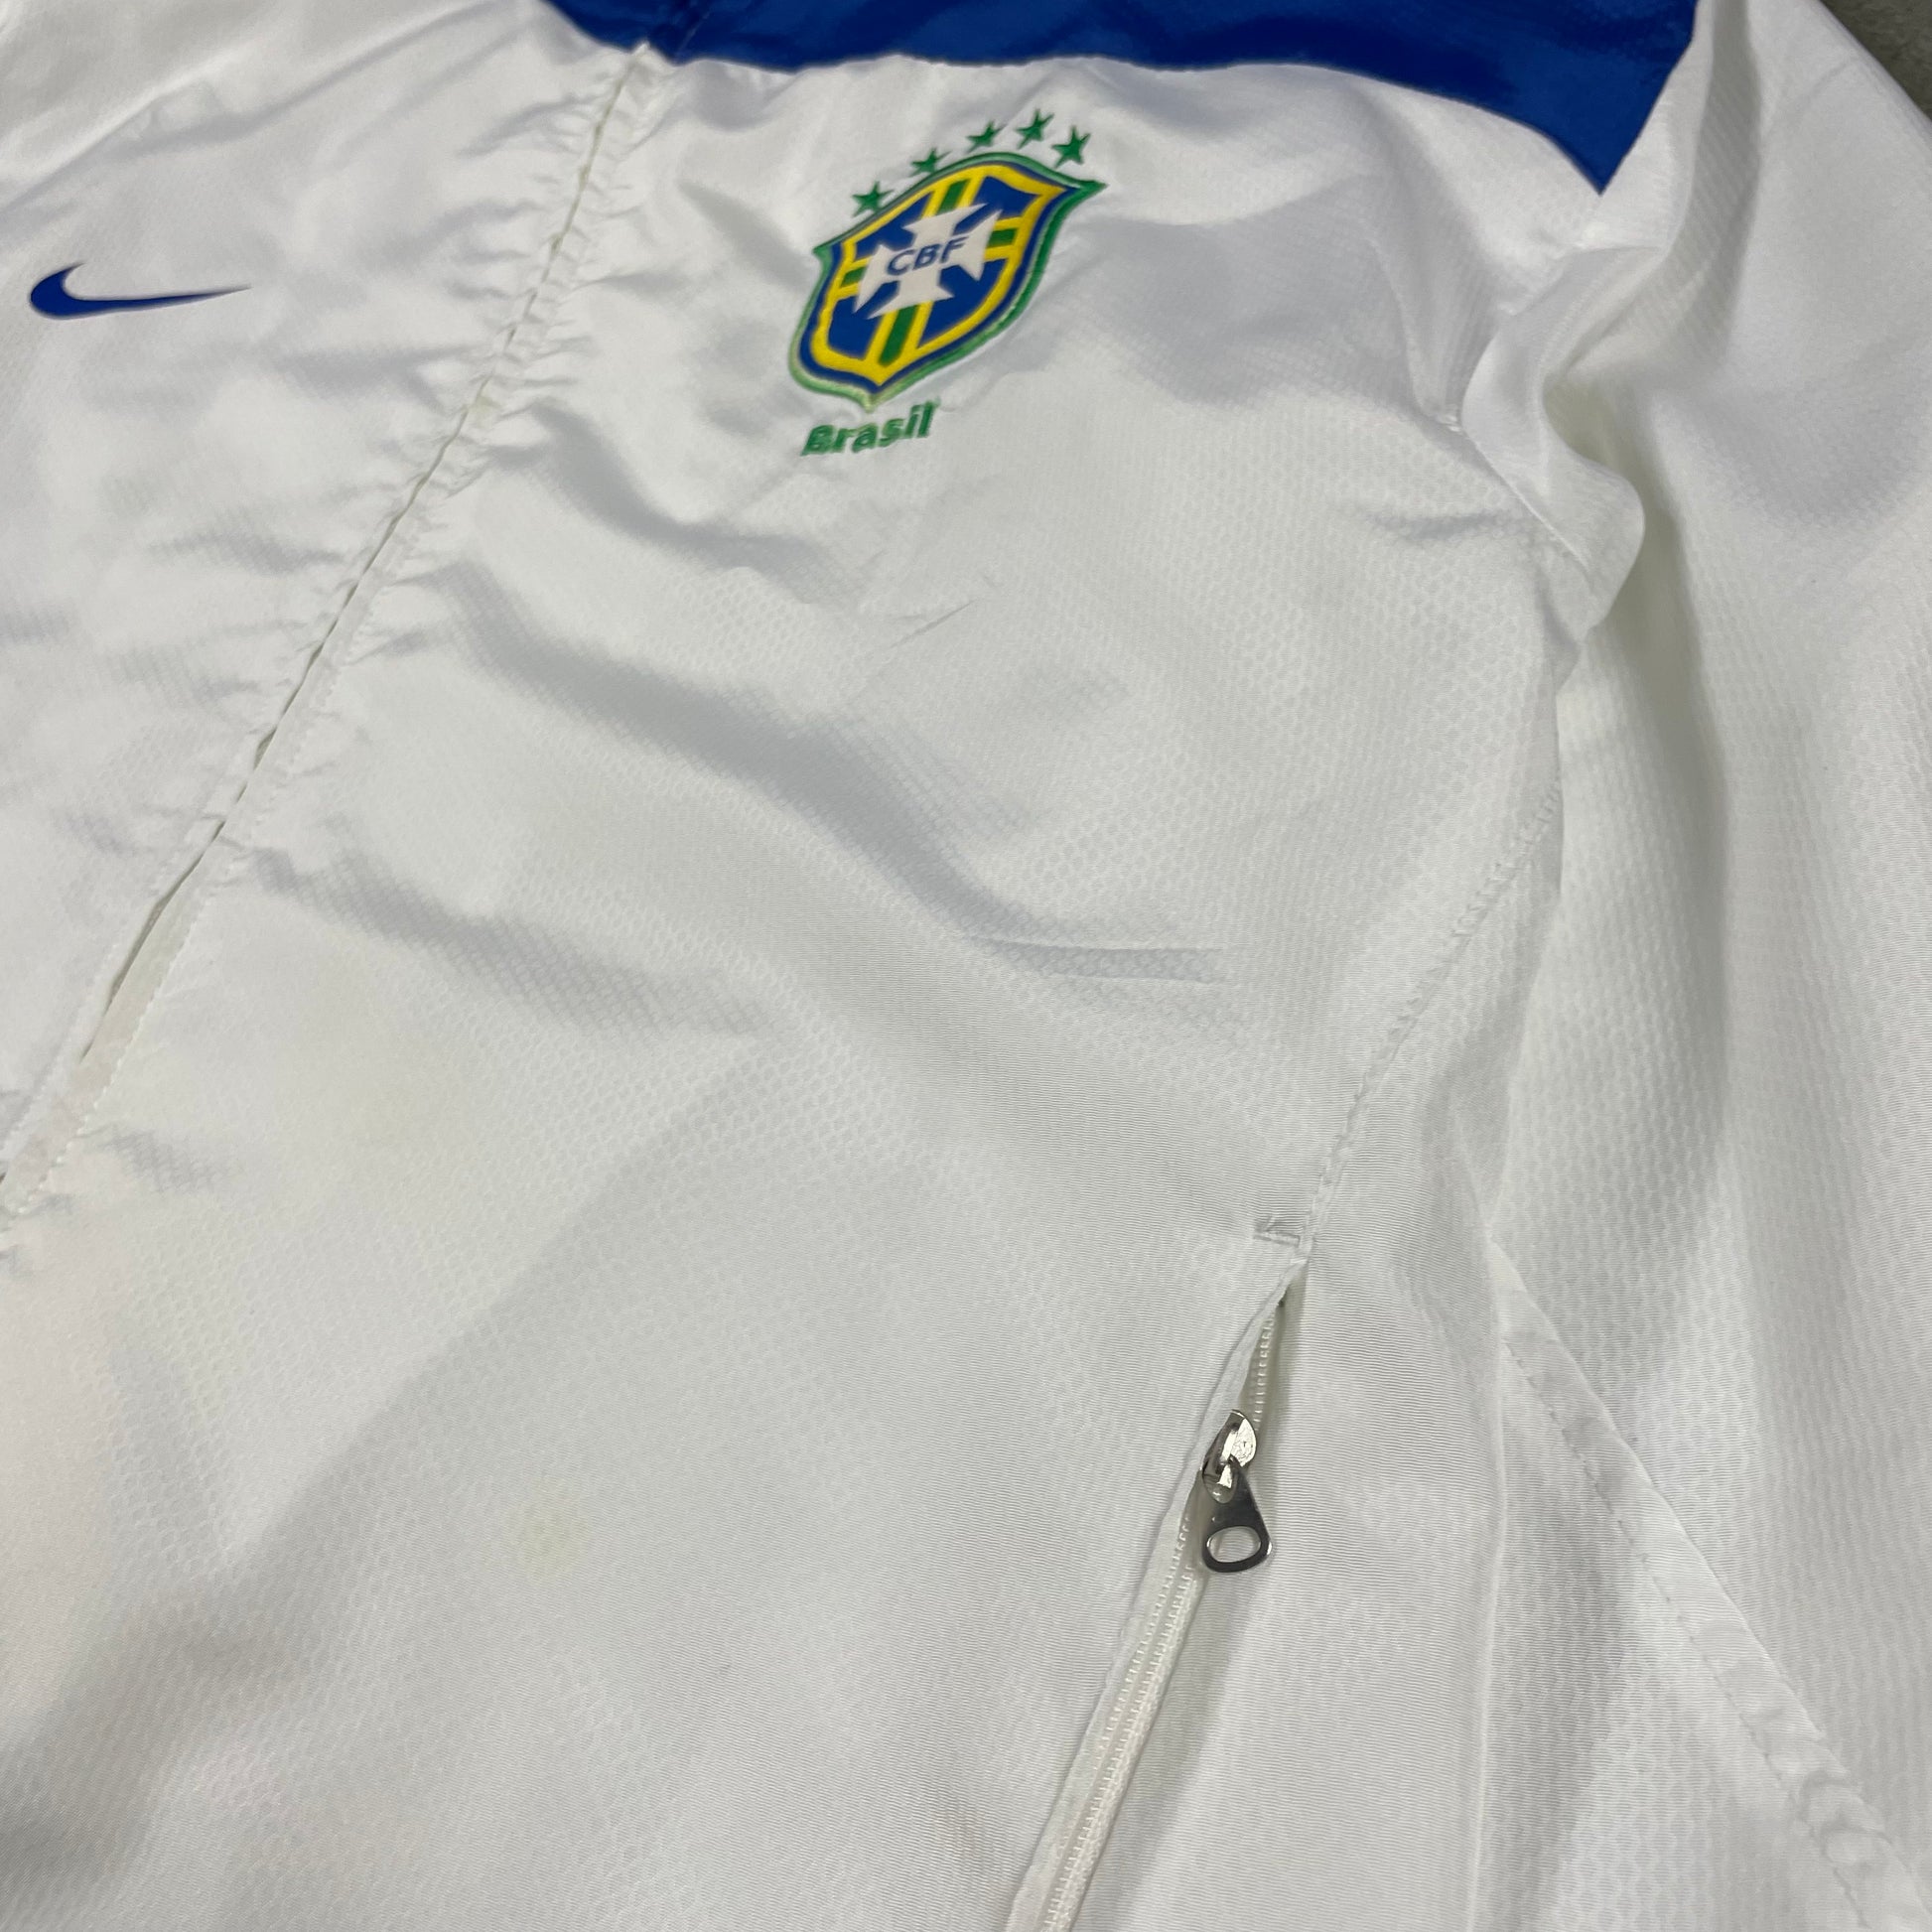 Nike Vintage Nike Brasil (Brazil) Jacket